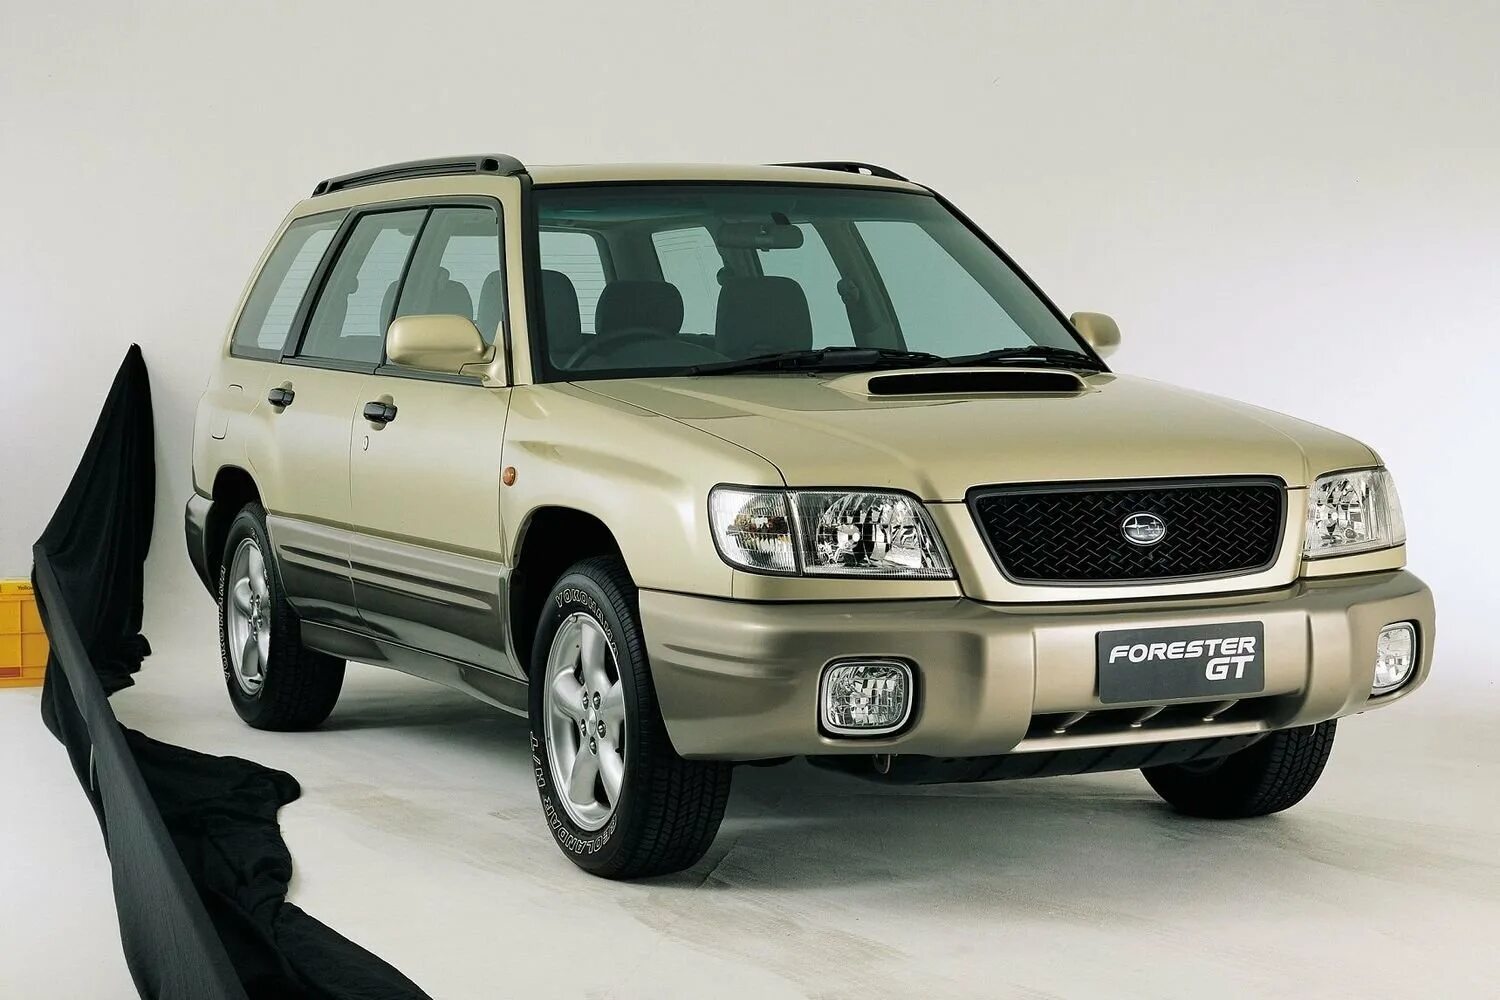 Субару форестер 1 поколения. Subaru Forester 1 поколения. Субару Форестер 1997. Subaru Forester SF 1997. Субару Форестер 1997 2.0.